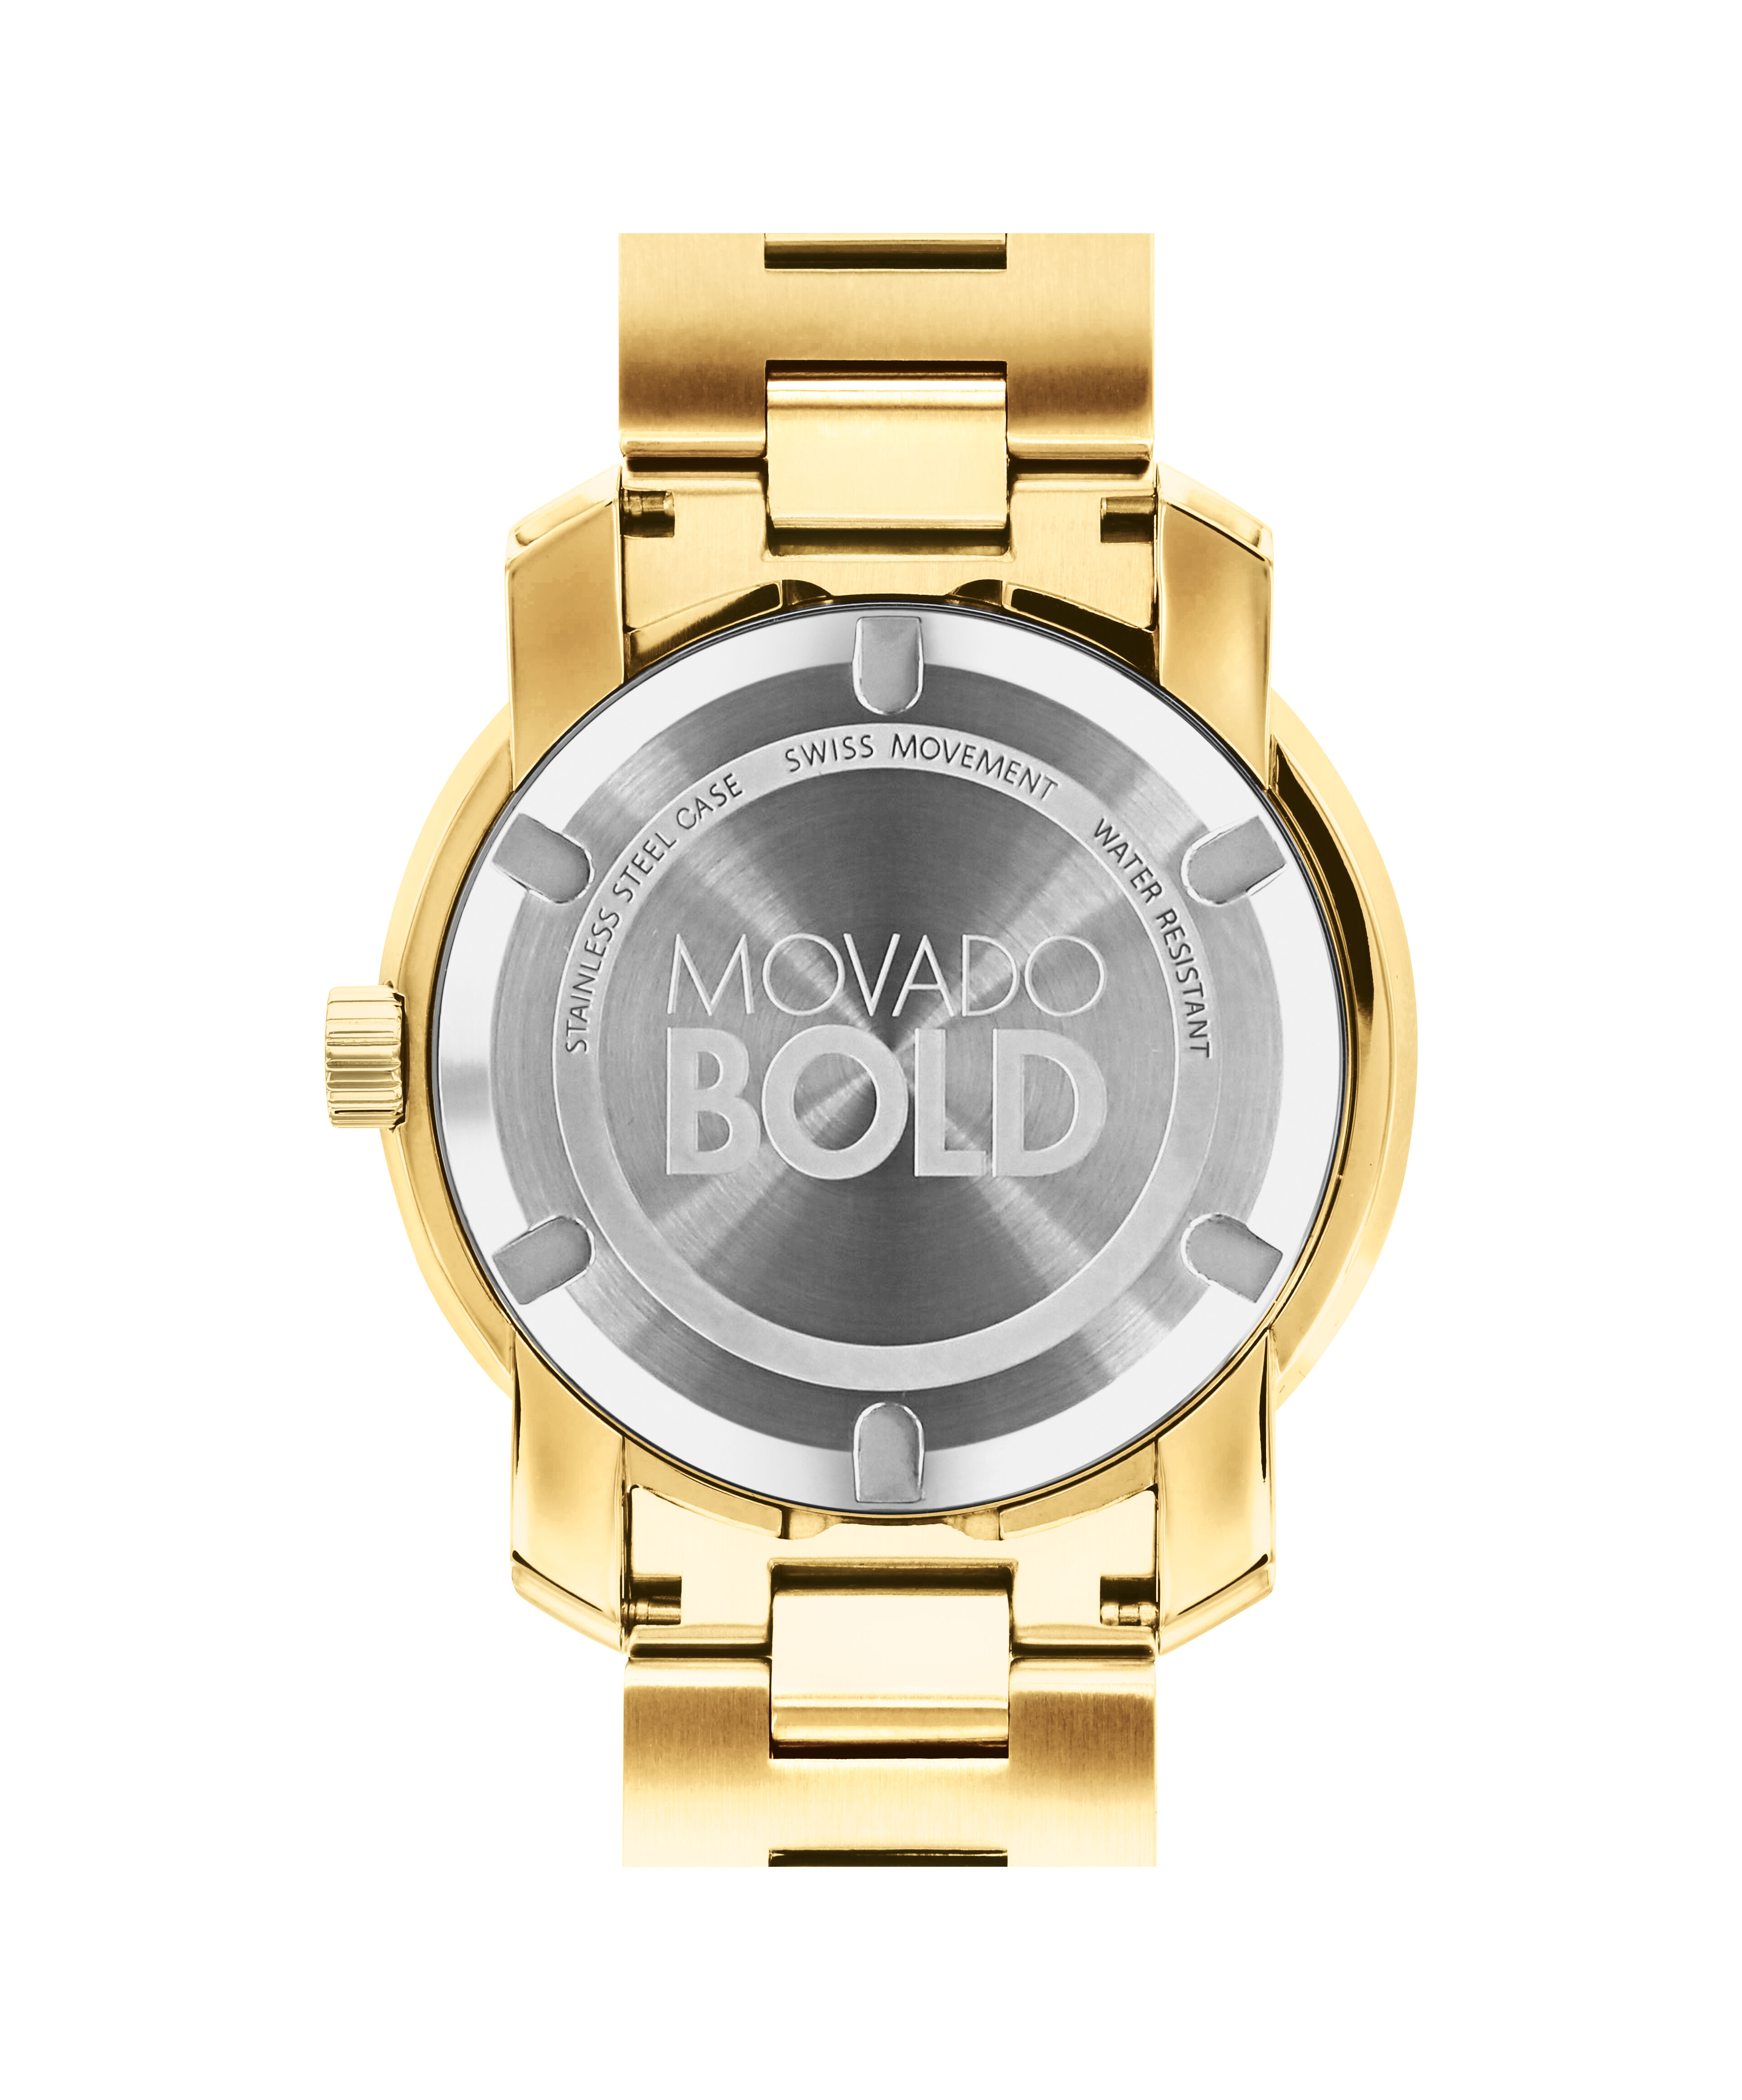 Fake Gold Watch With Diamonds Amazon